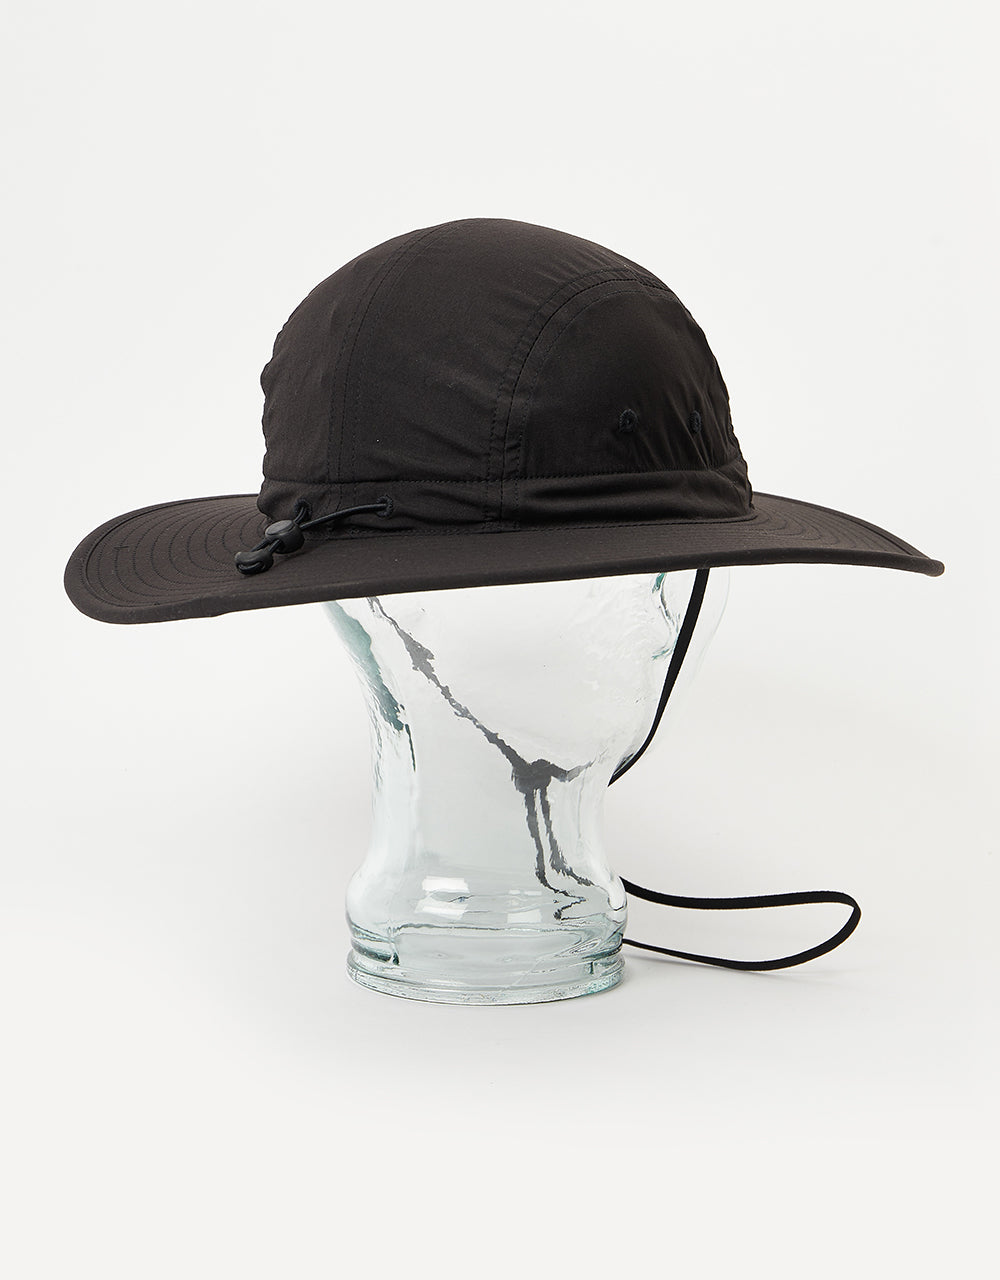 Patagonia Quandary Brimmer Bucket Hat - Black